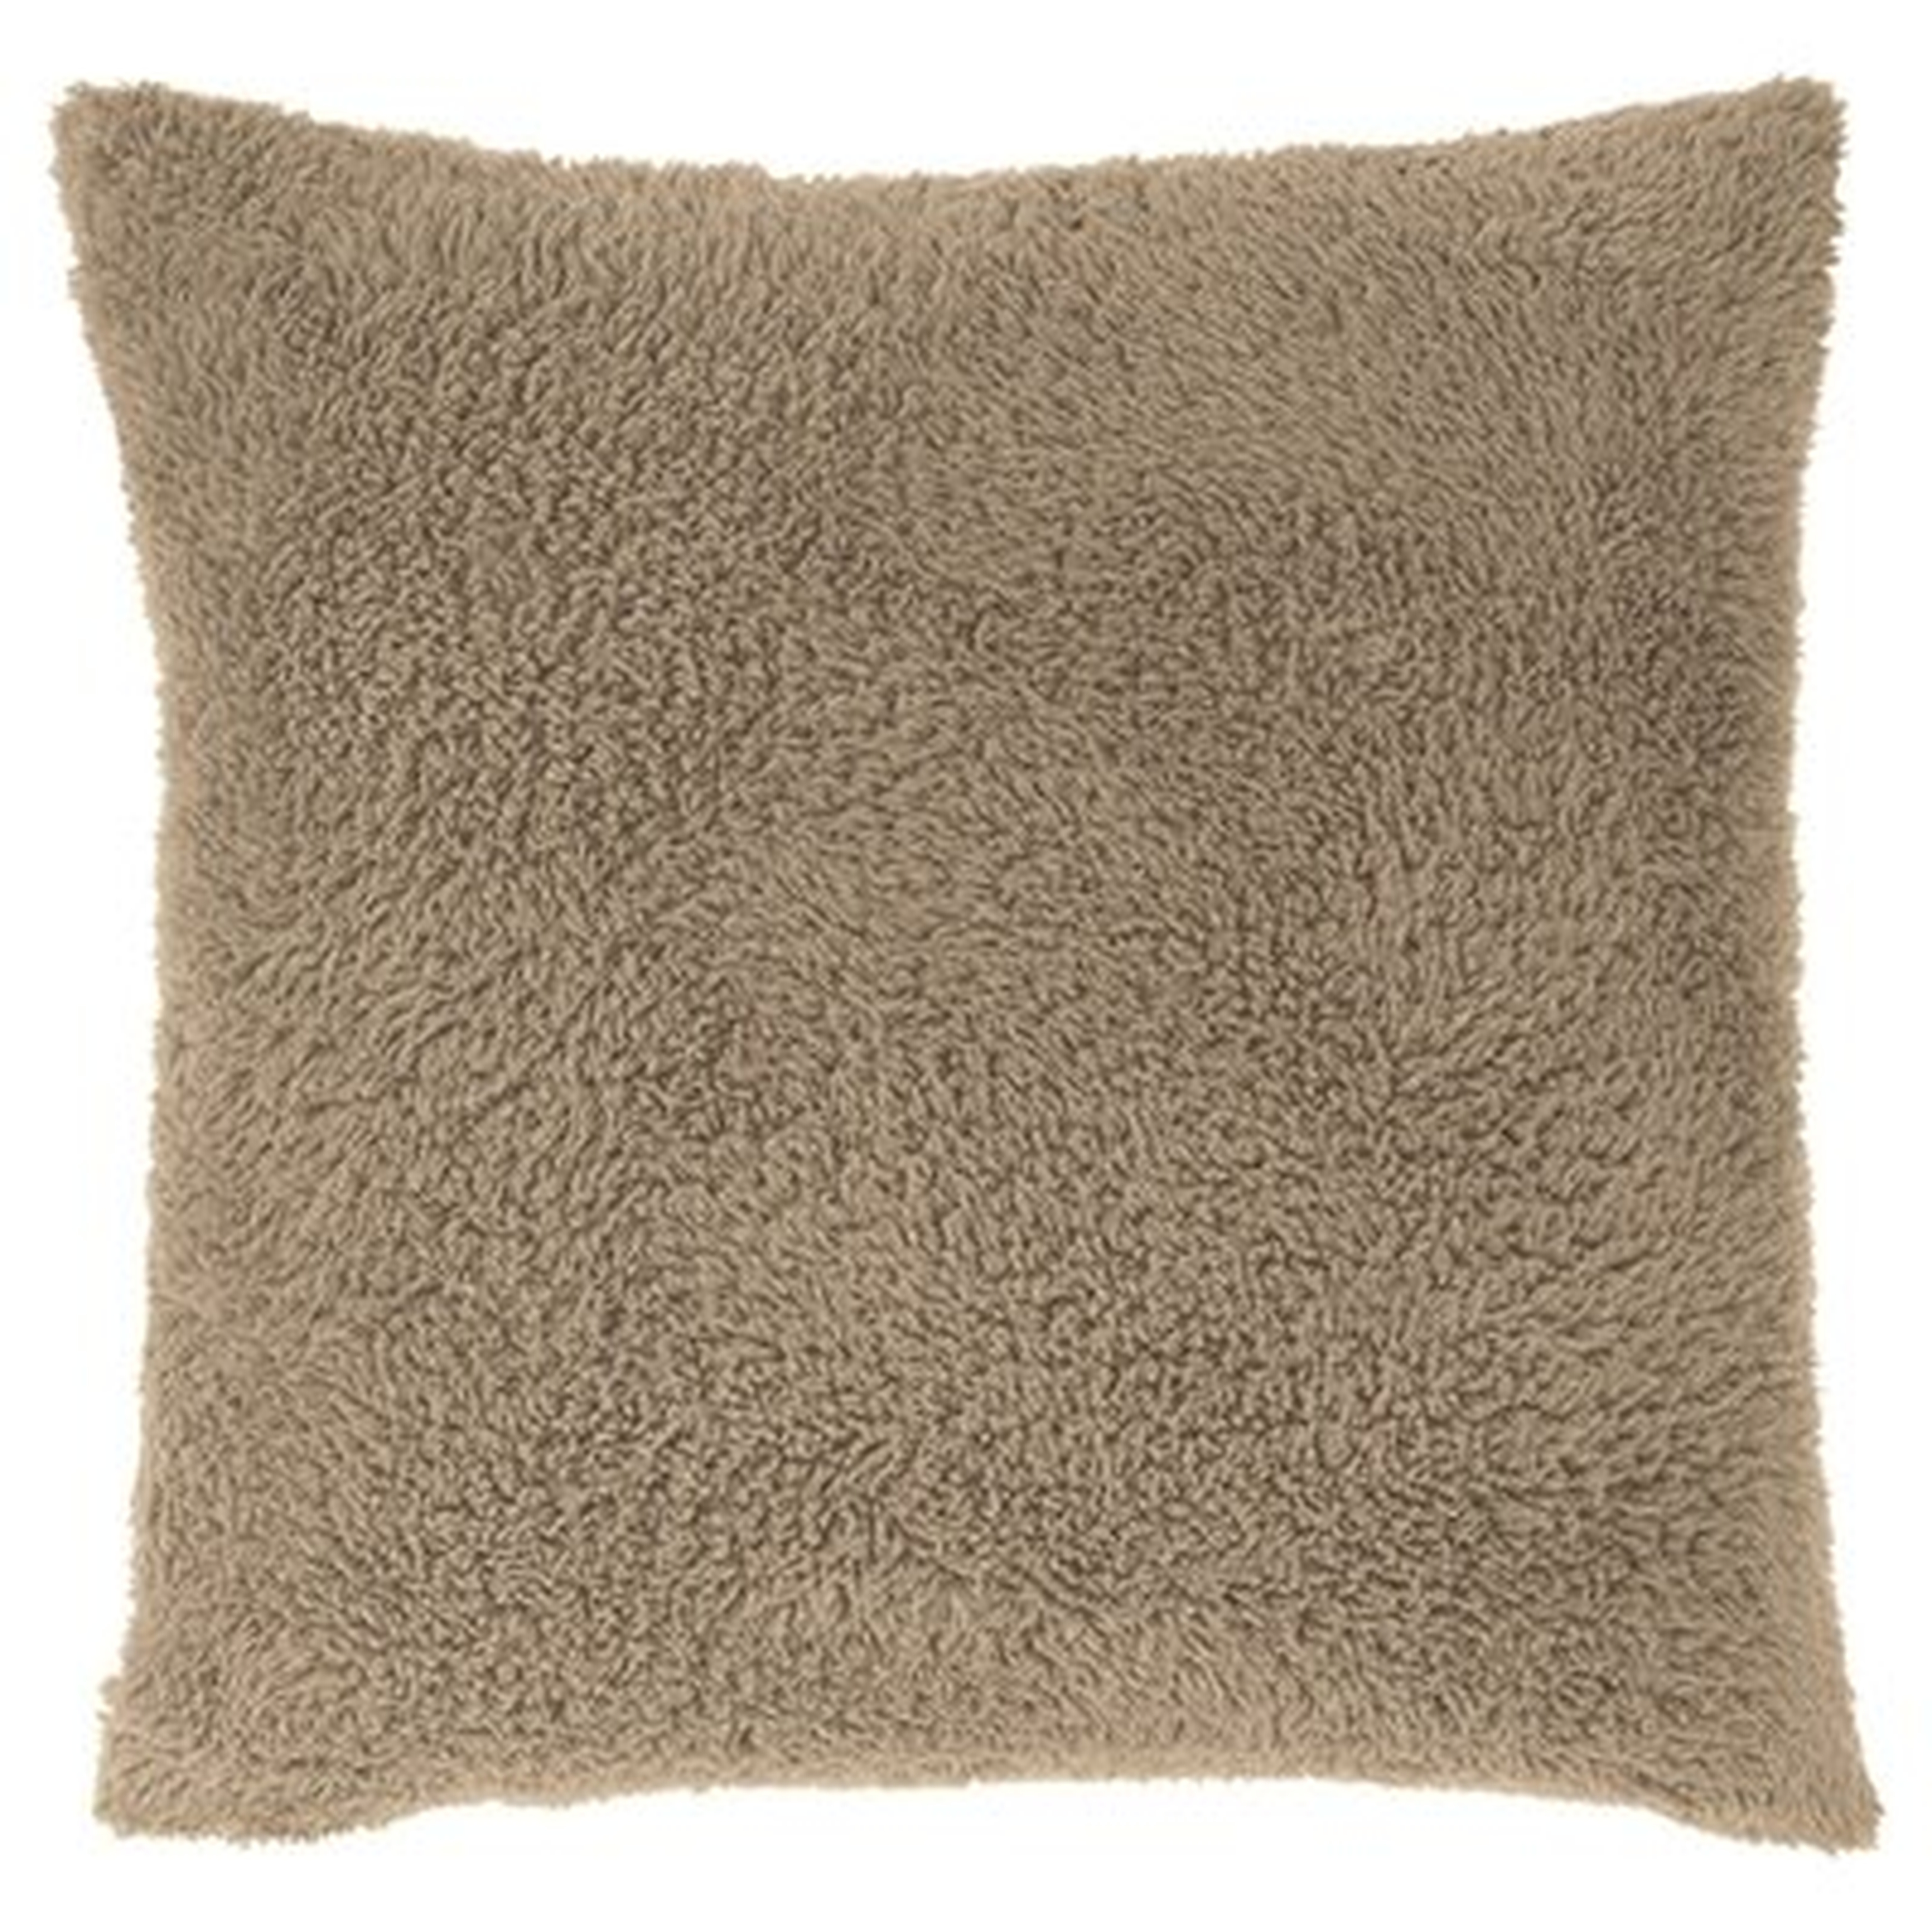 Furry Texture Square Pillow Cover & Insert - Wayfair